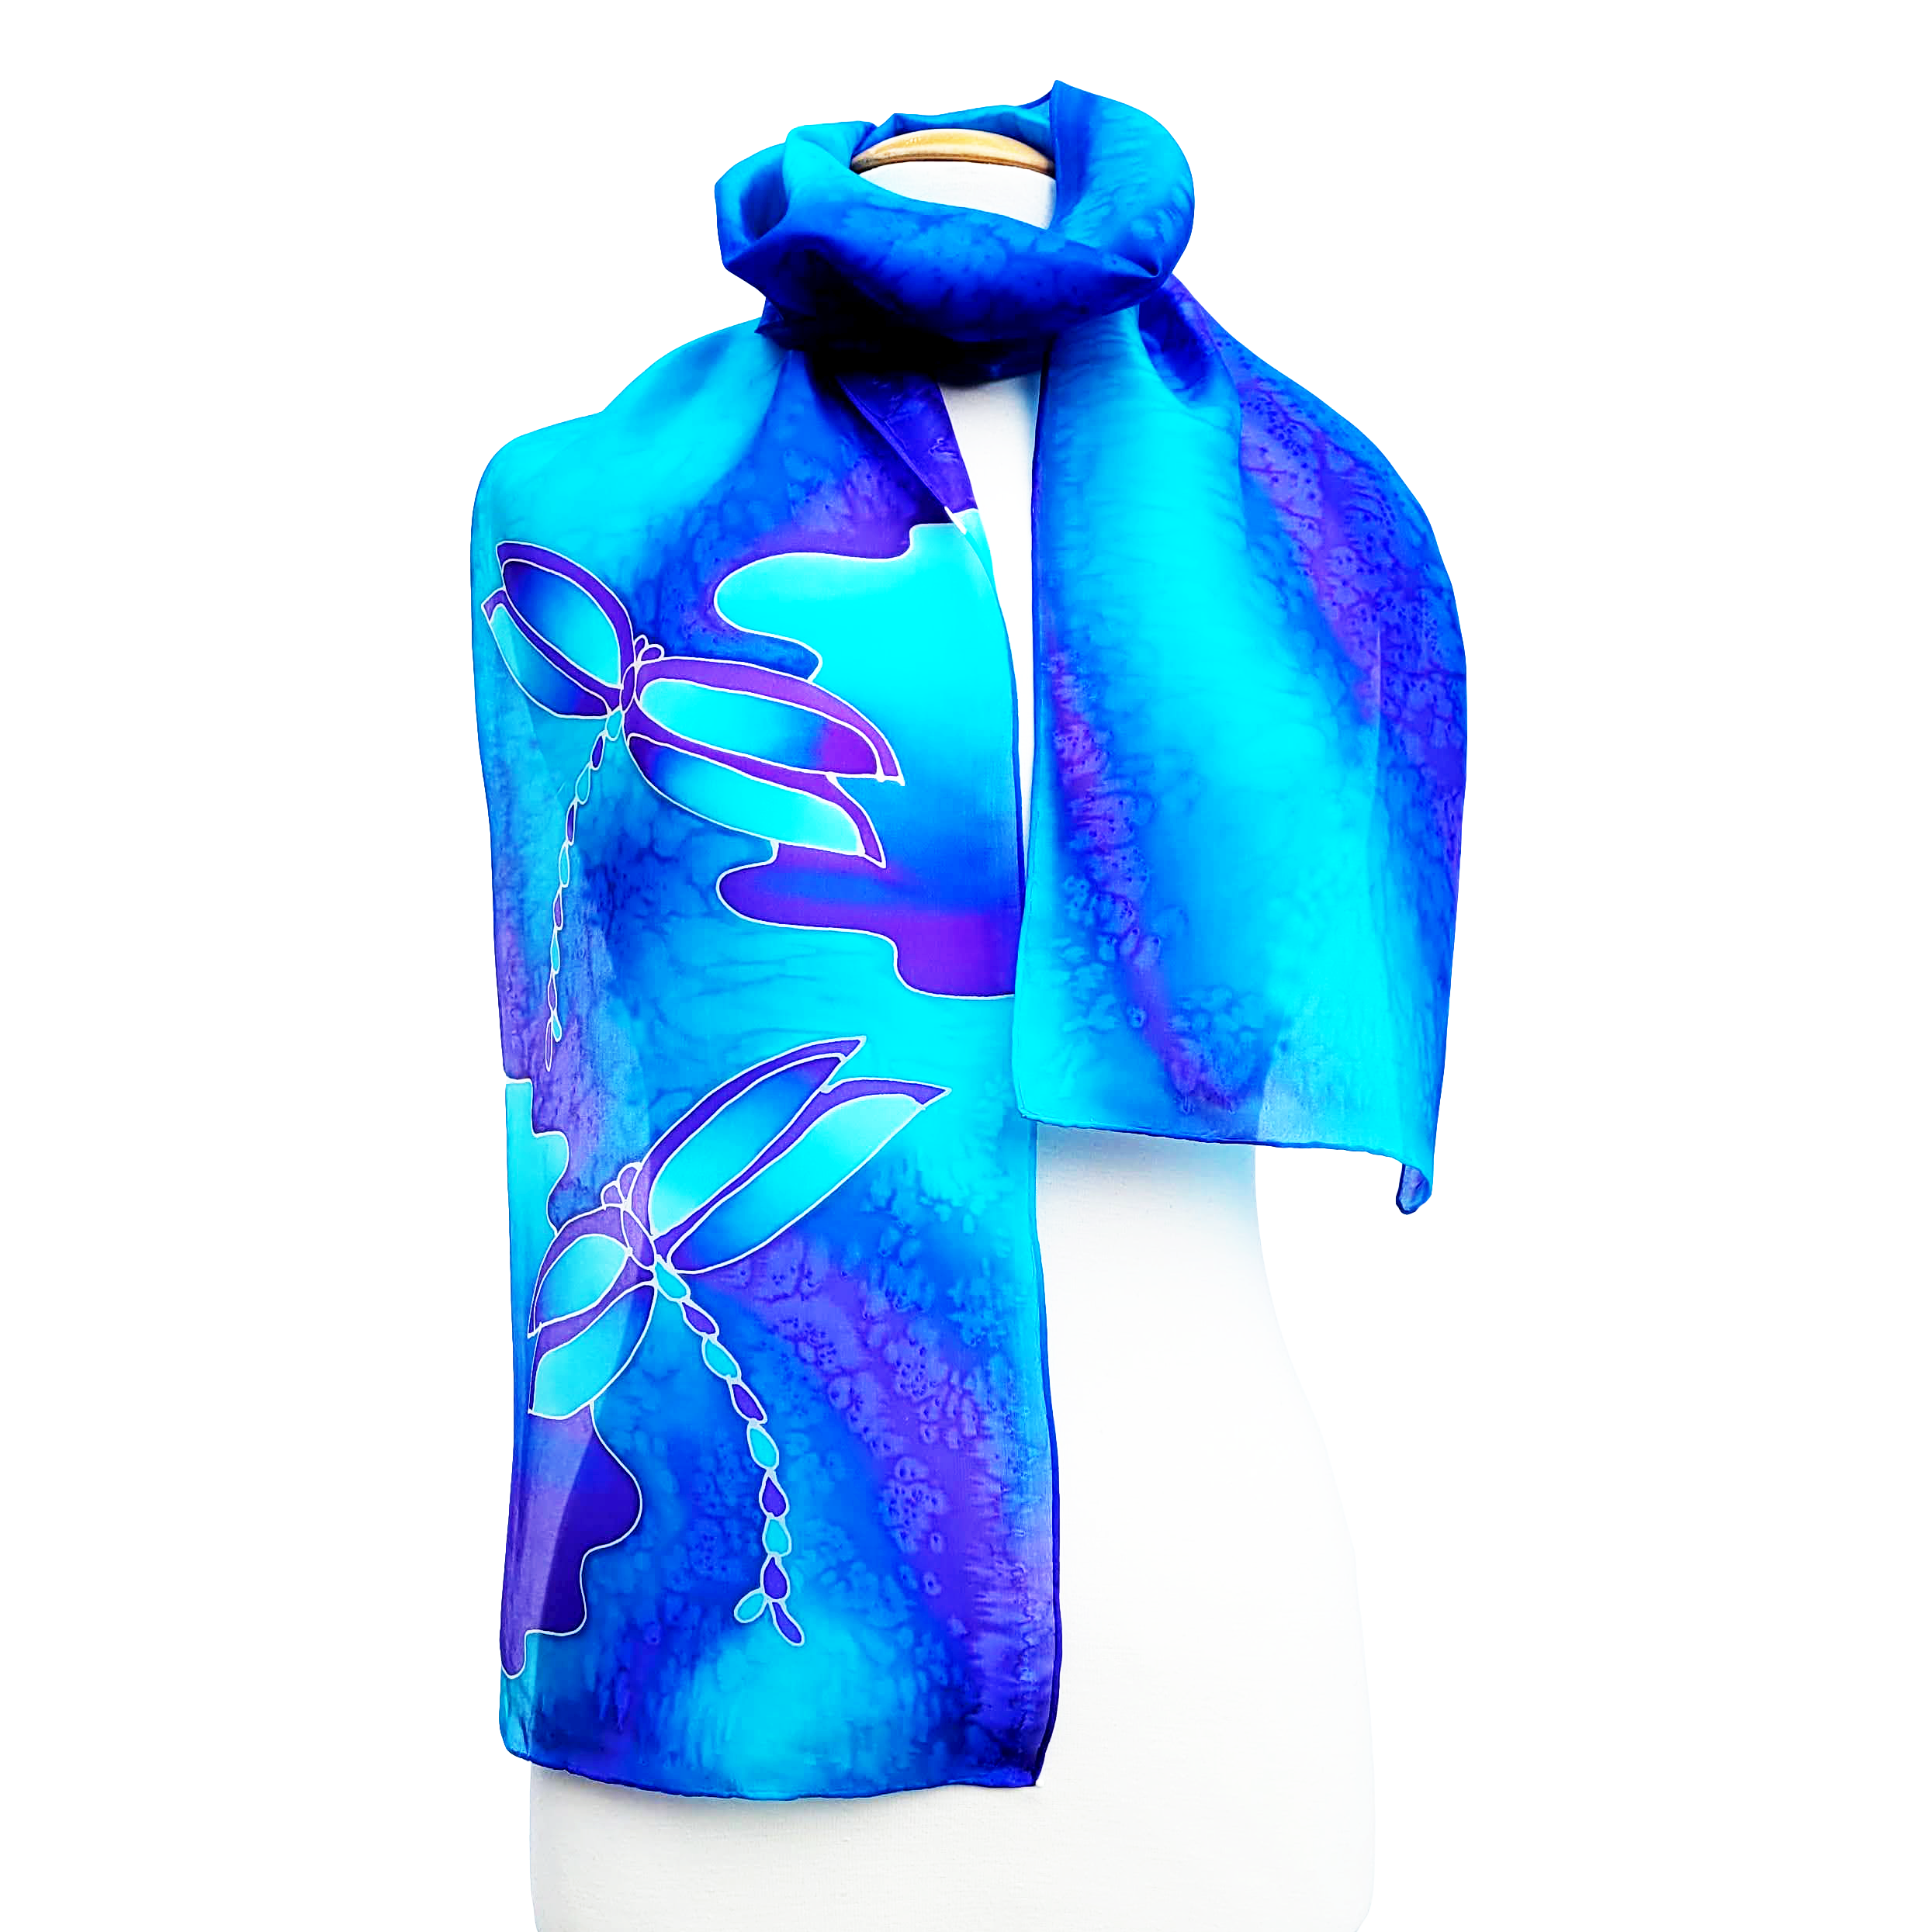 silk clothing hand painted scarf blue dragonflies art design made in Canada by Lynne Kiel